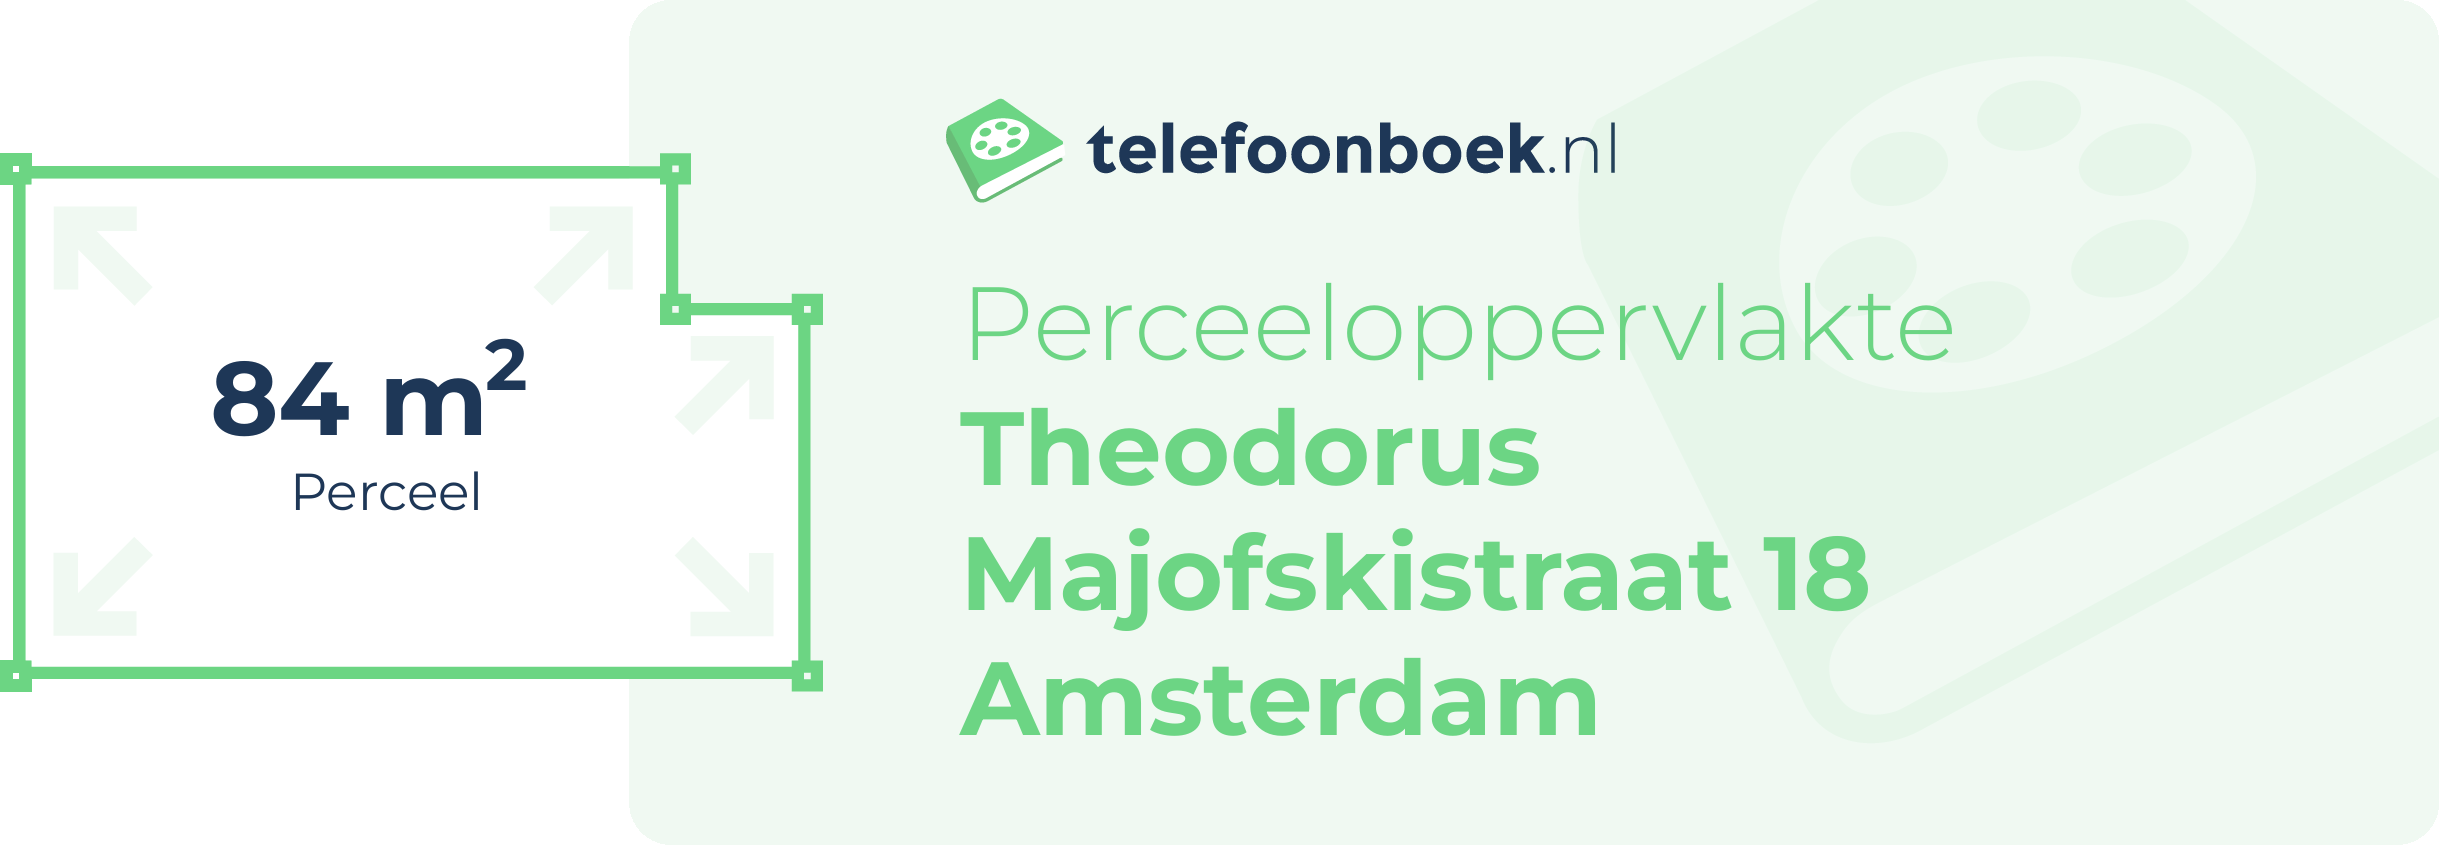 Perceeloppervlakte Theodorus Majofskistraat 18 Amsterdam